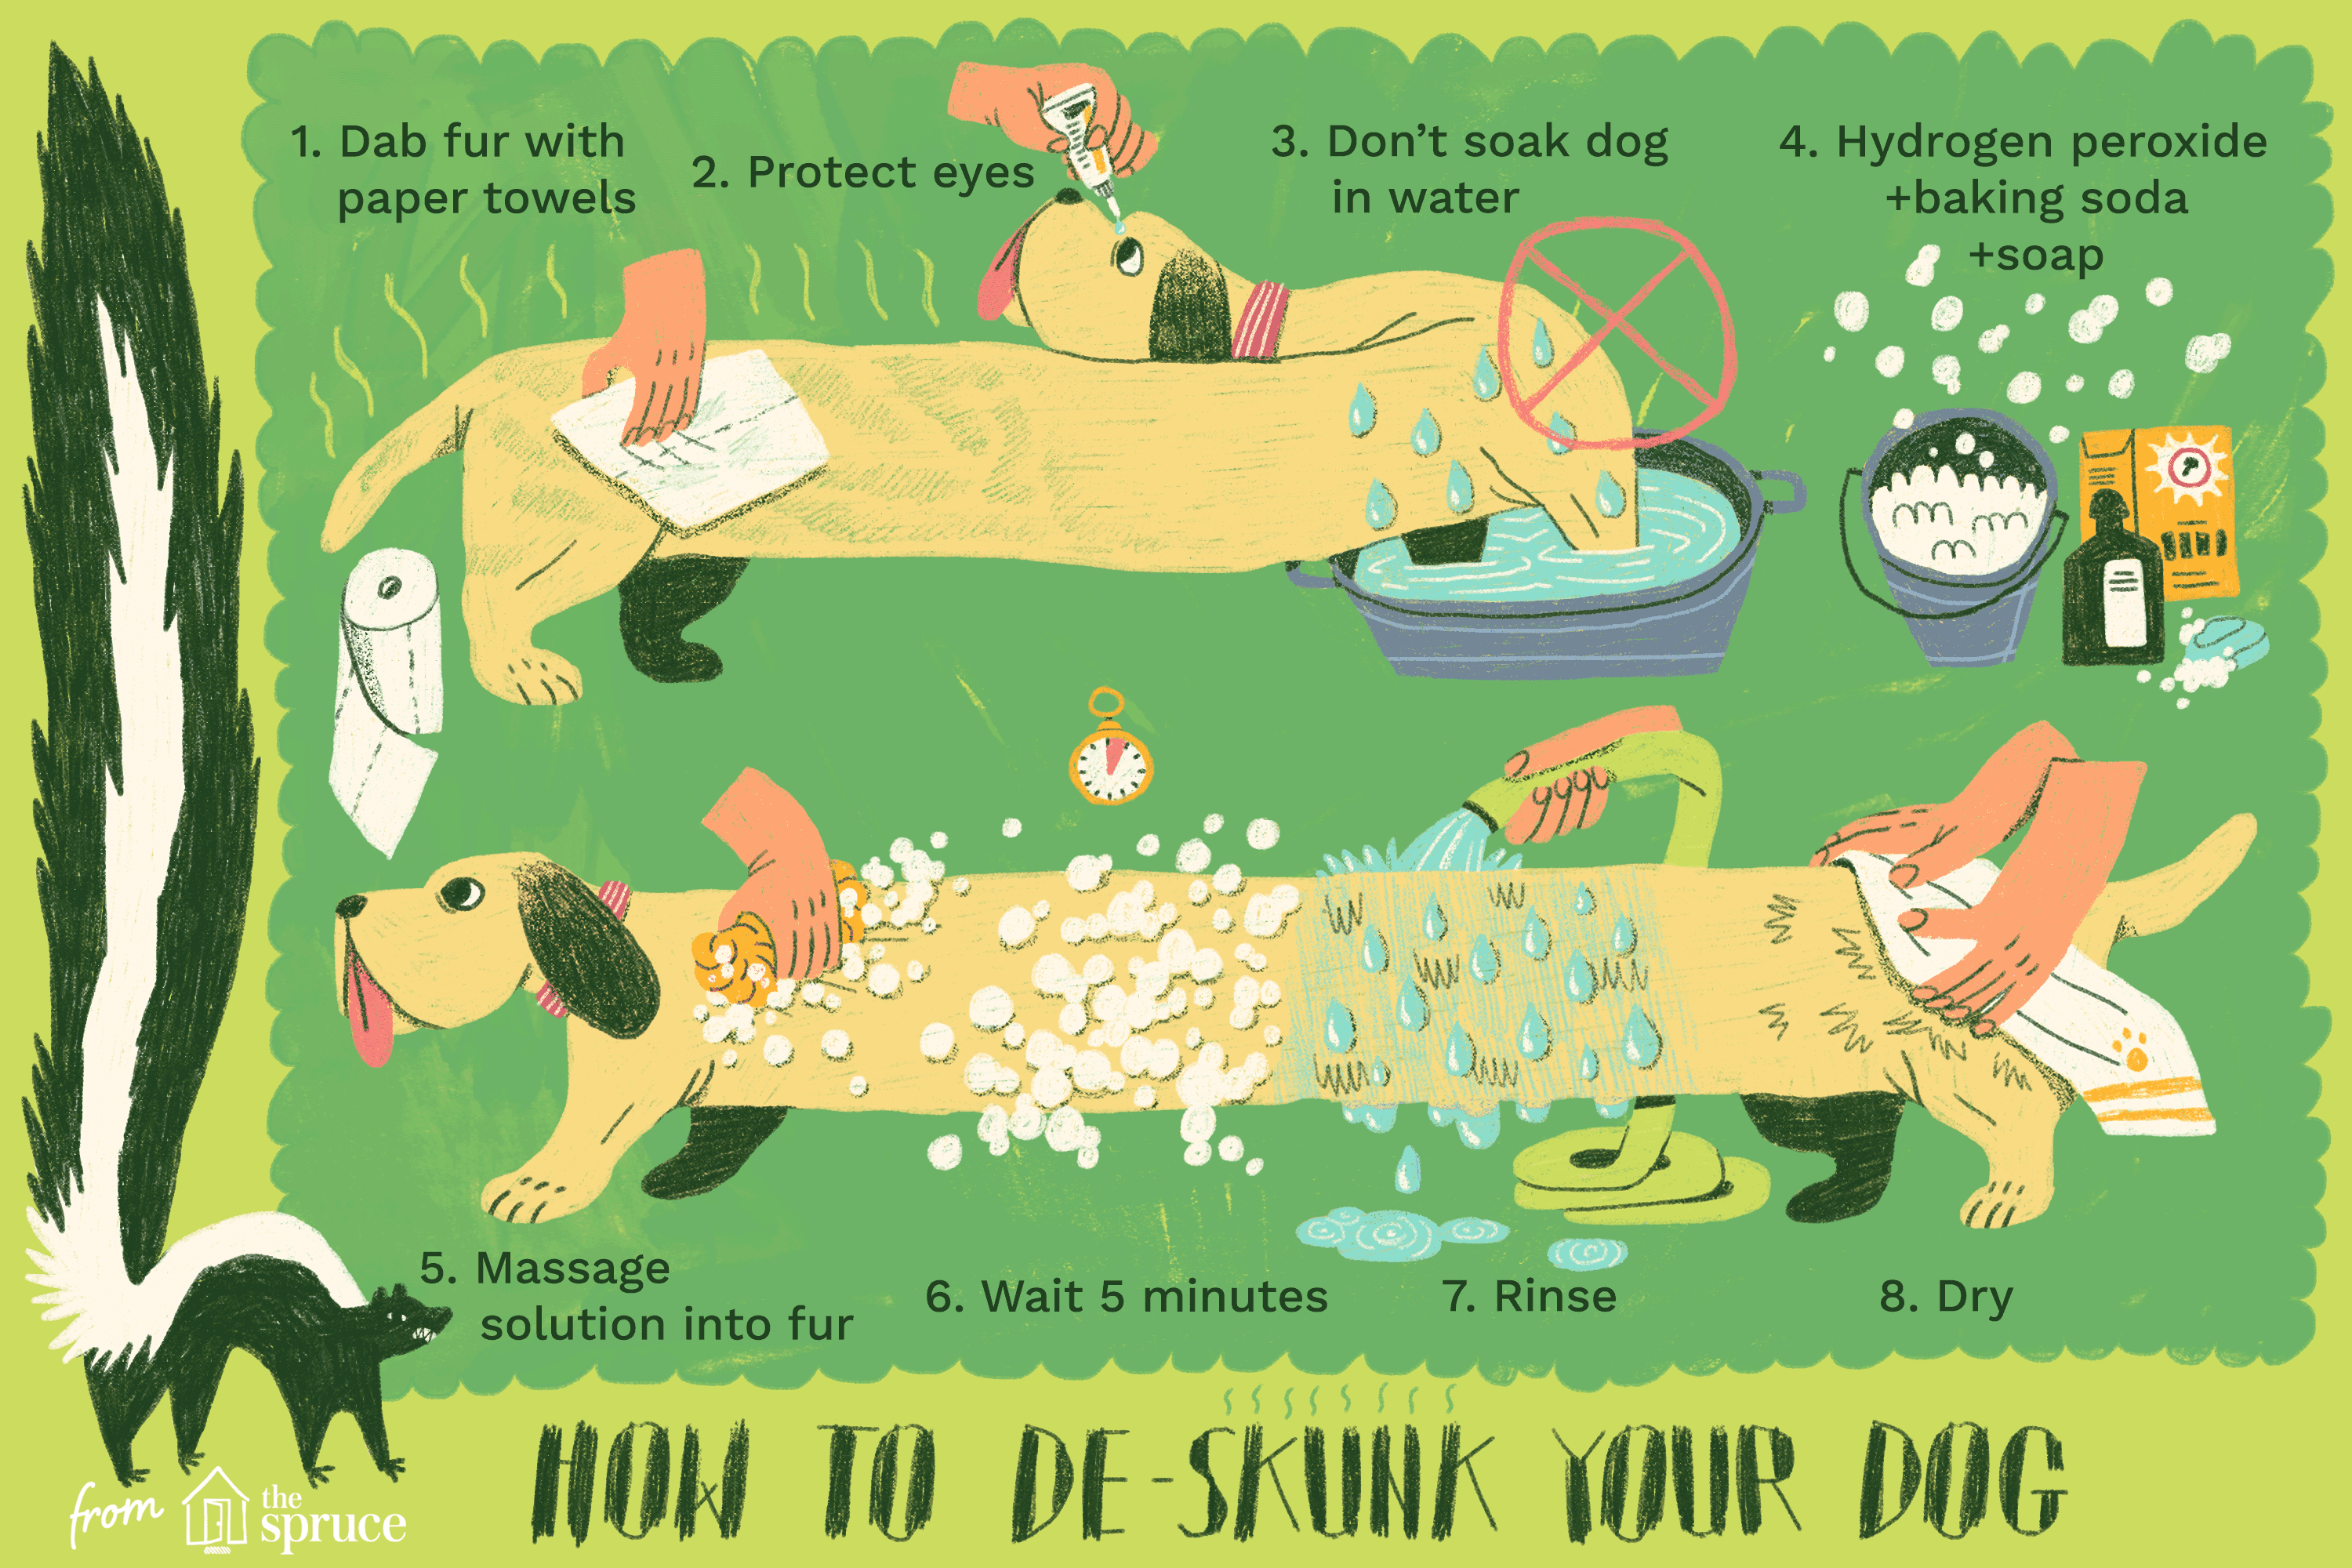 illustration of how to deskunk your dog